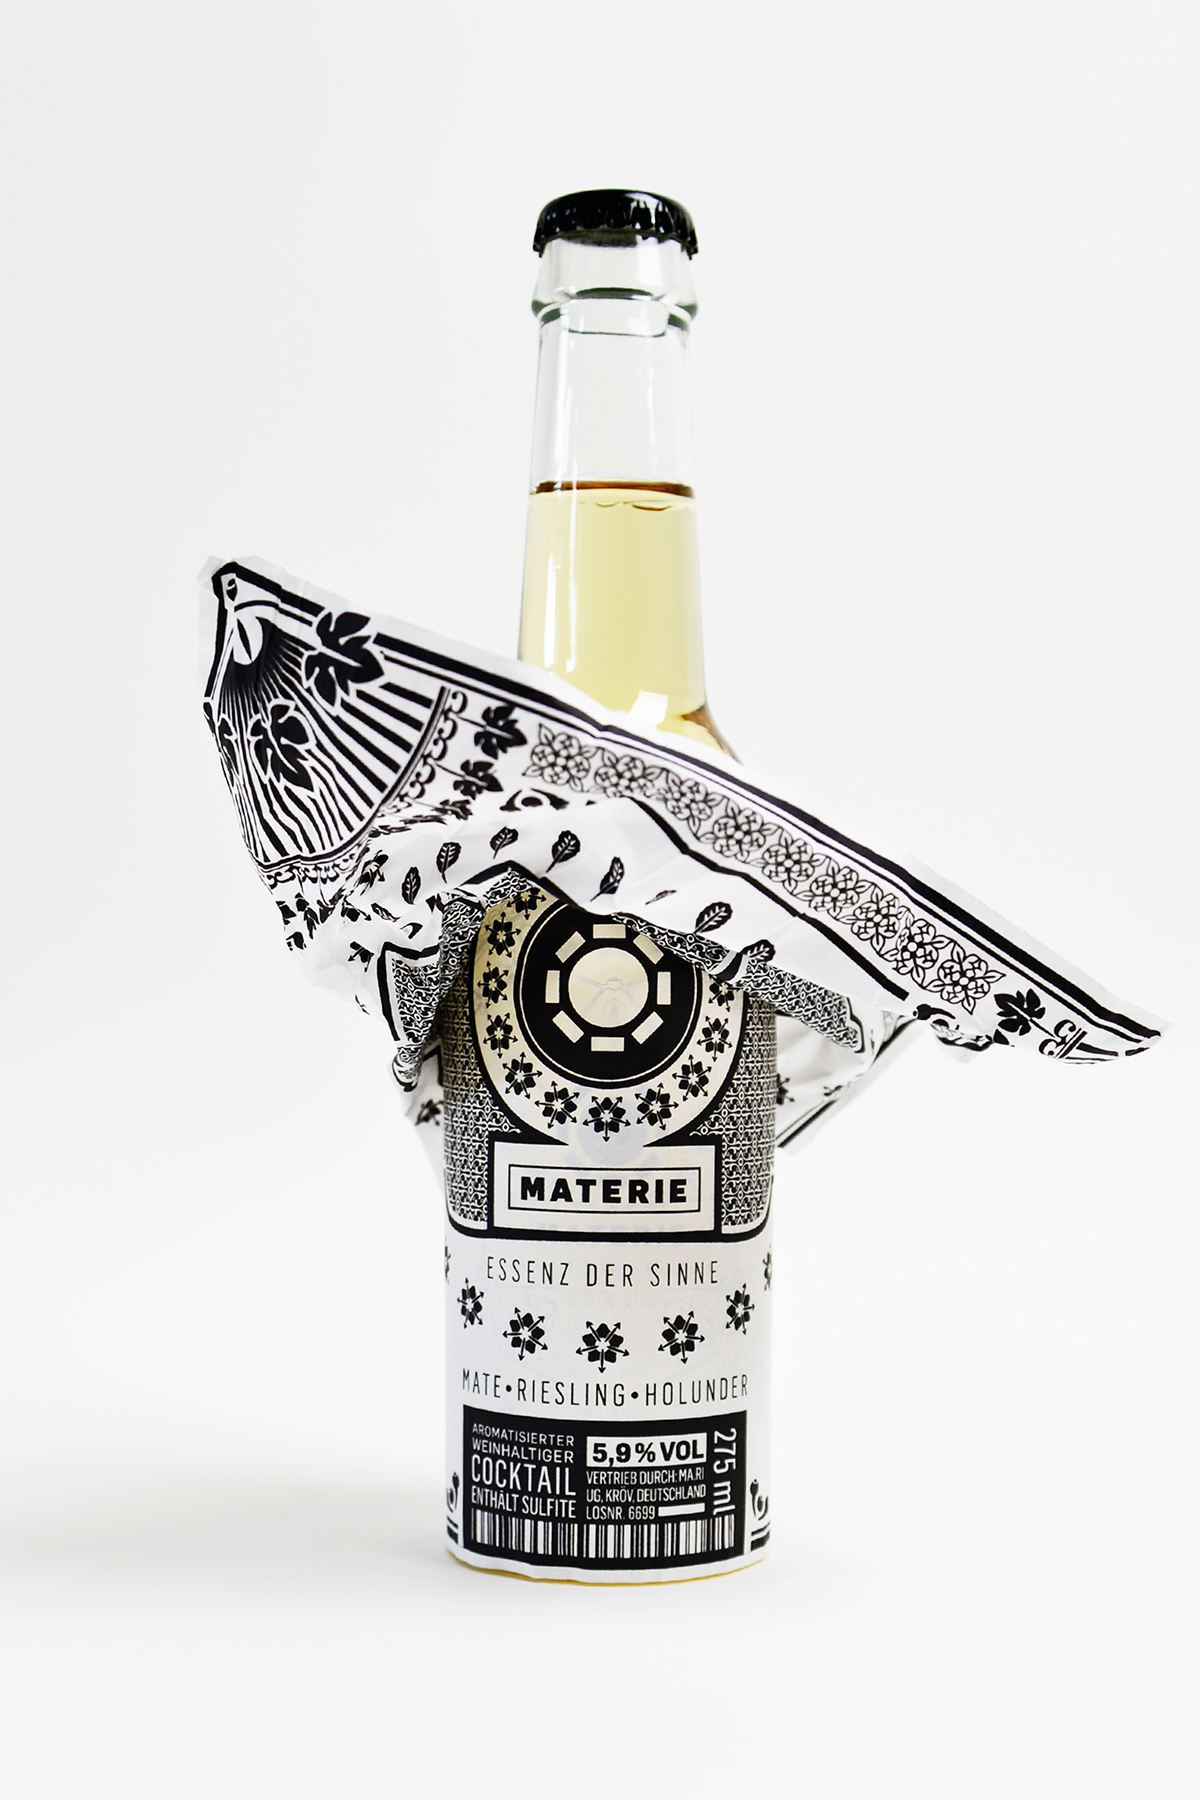 Patrick Pichler Wolfgang Warzilek bottle design materie wine cocktail bottle packaging Adronauts Wrap pattern